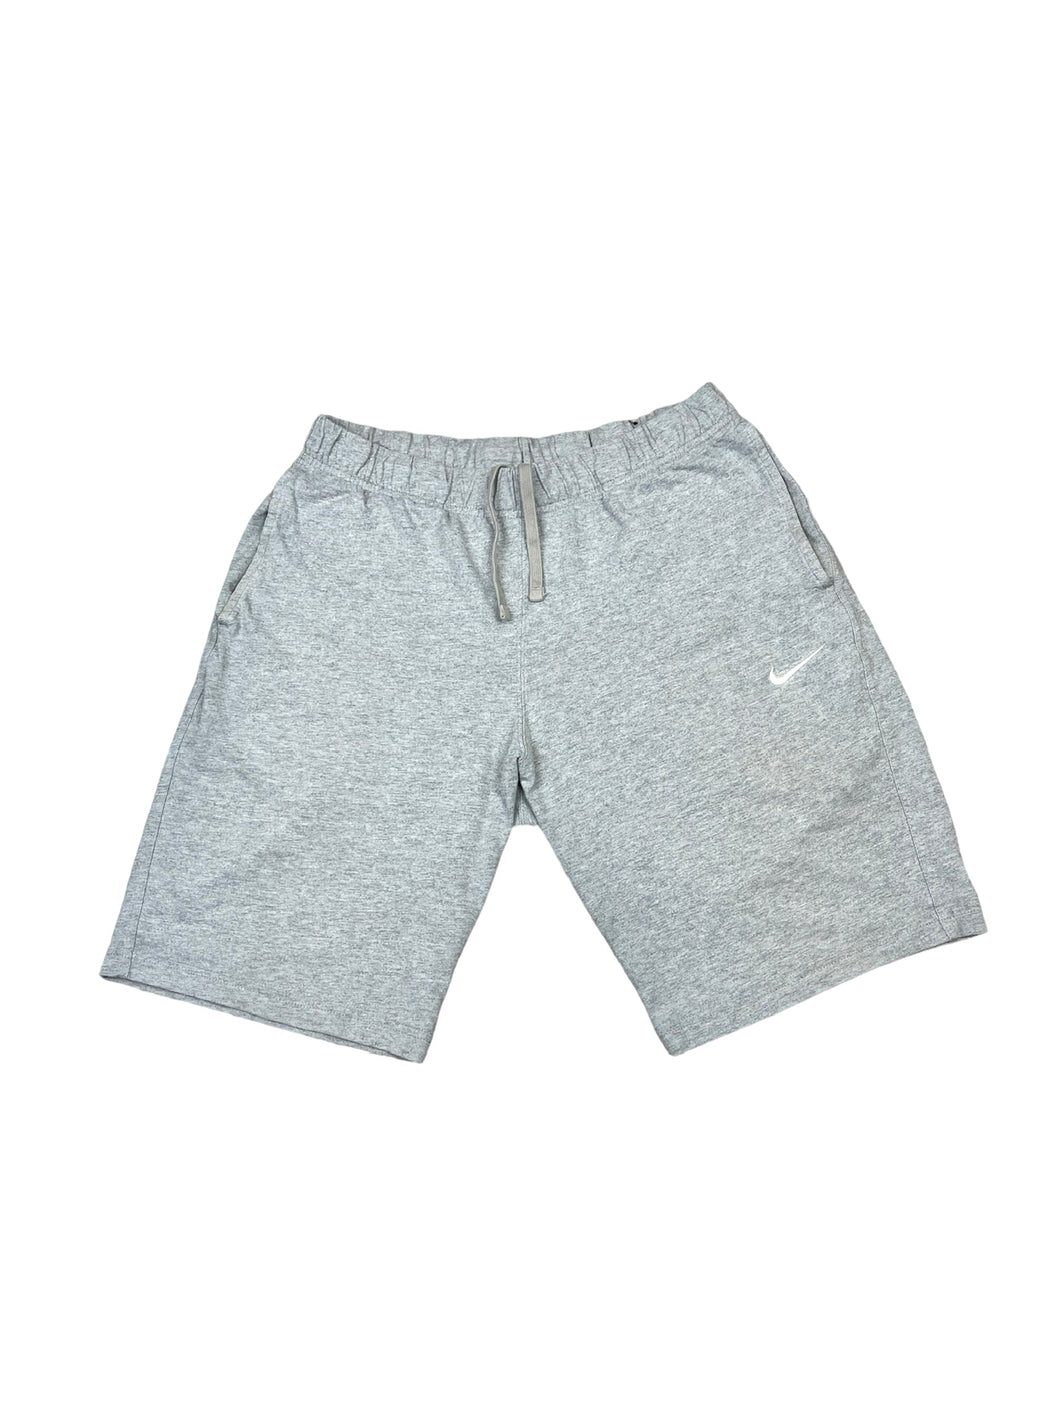 Nike Short - Medium